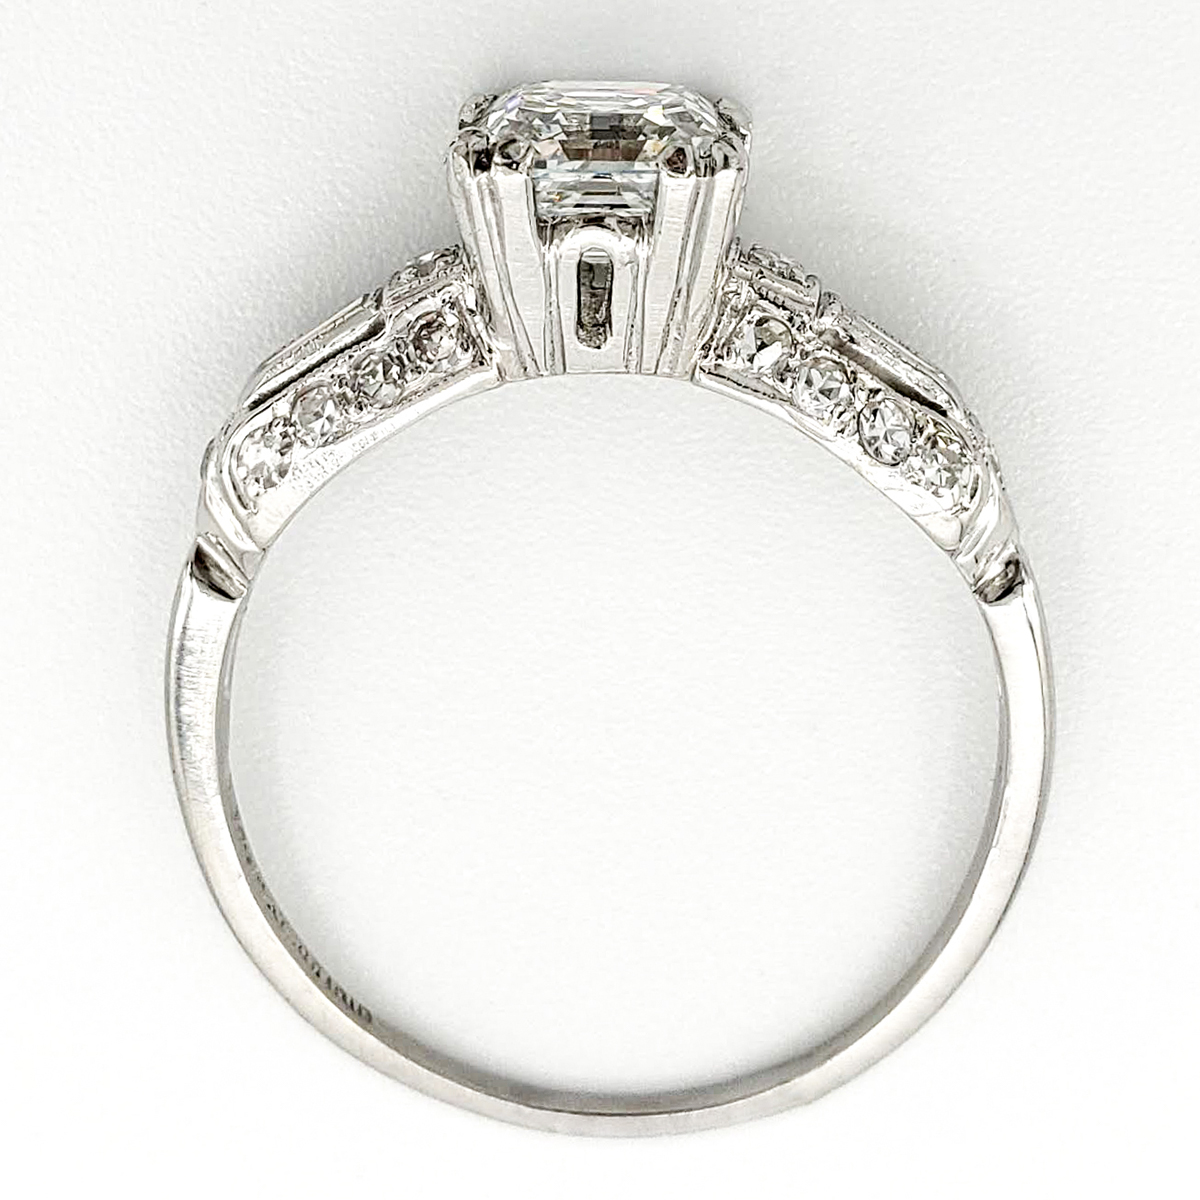 Vintage Platinum Engagement Ring With 1.01 Carat Asscher Cut Diamond GIA – F SI1